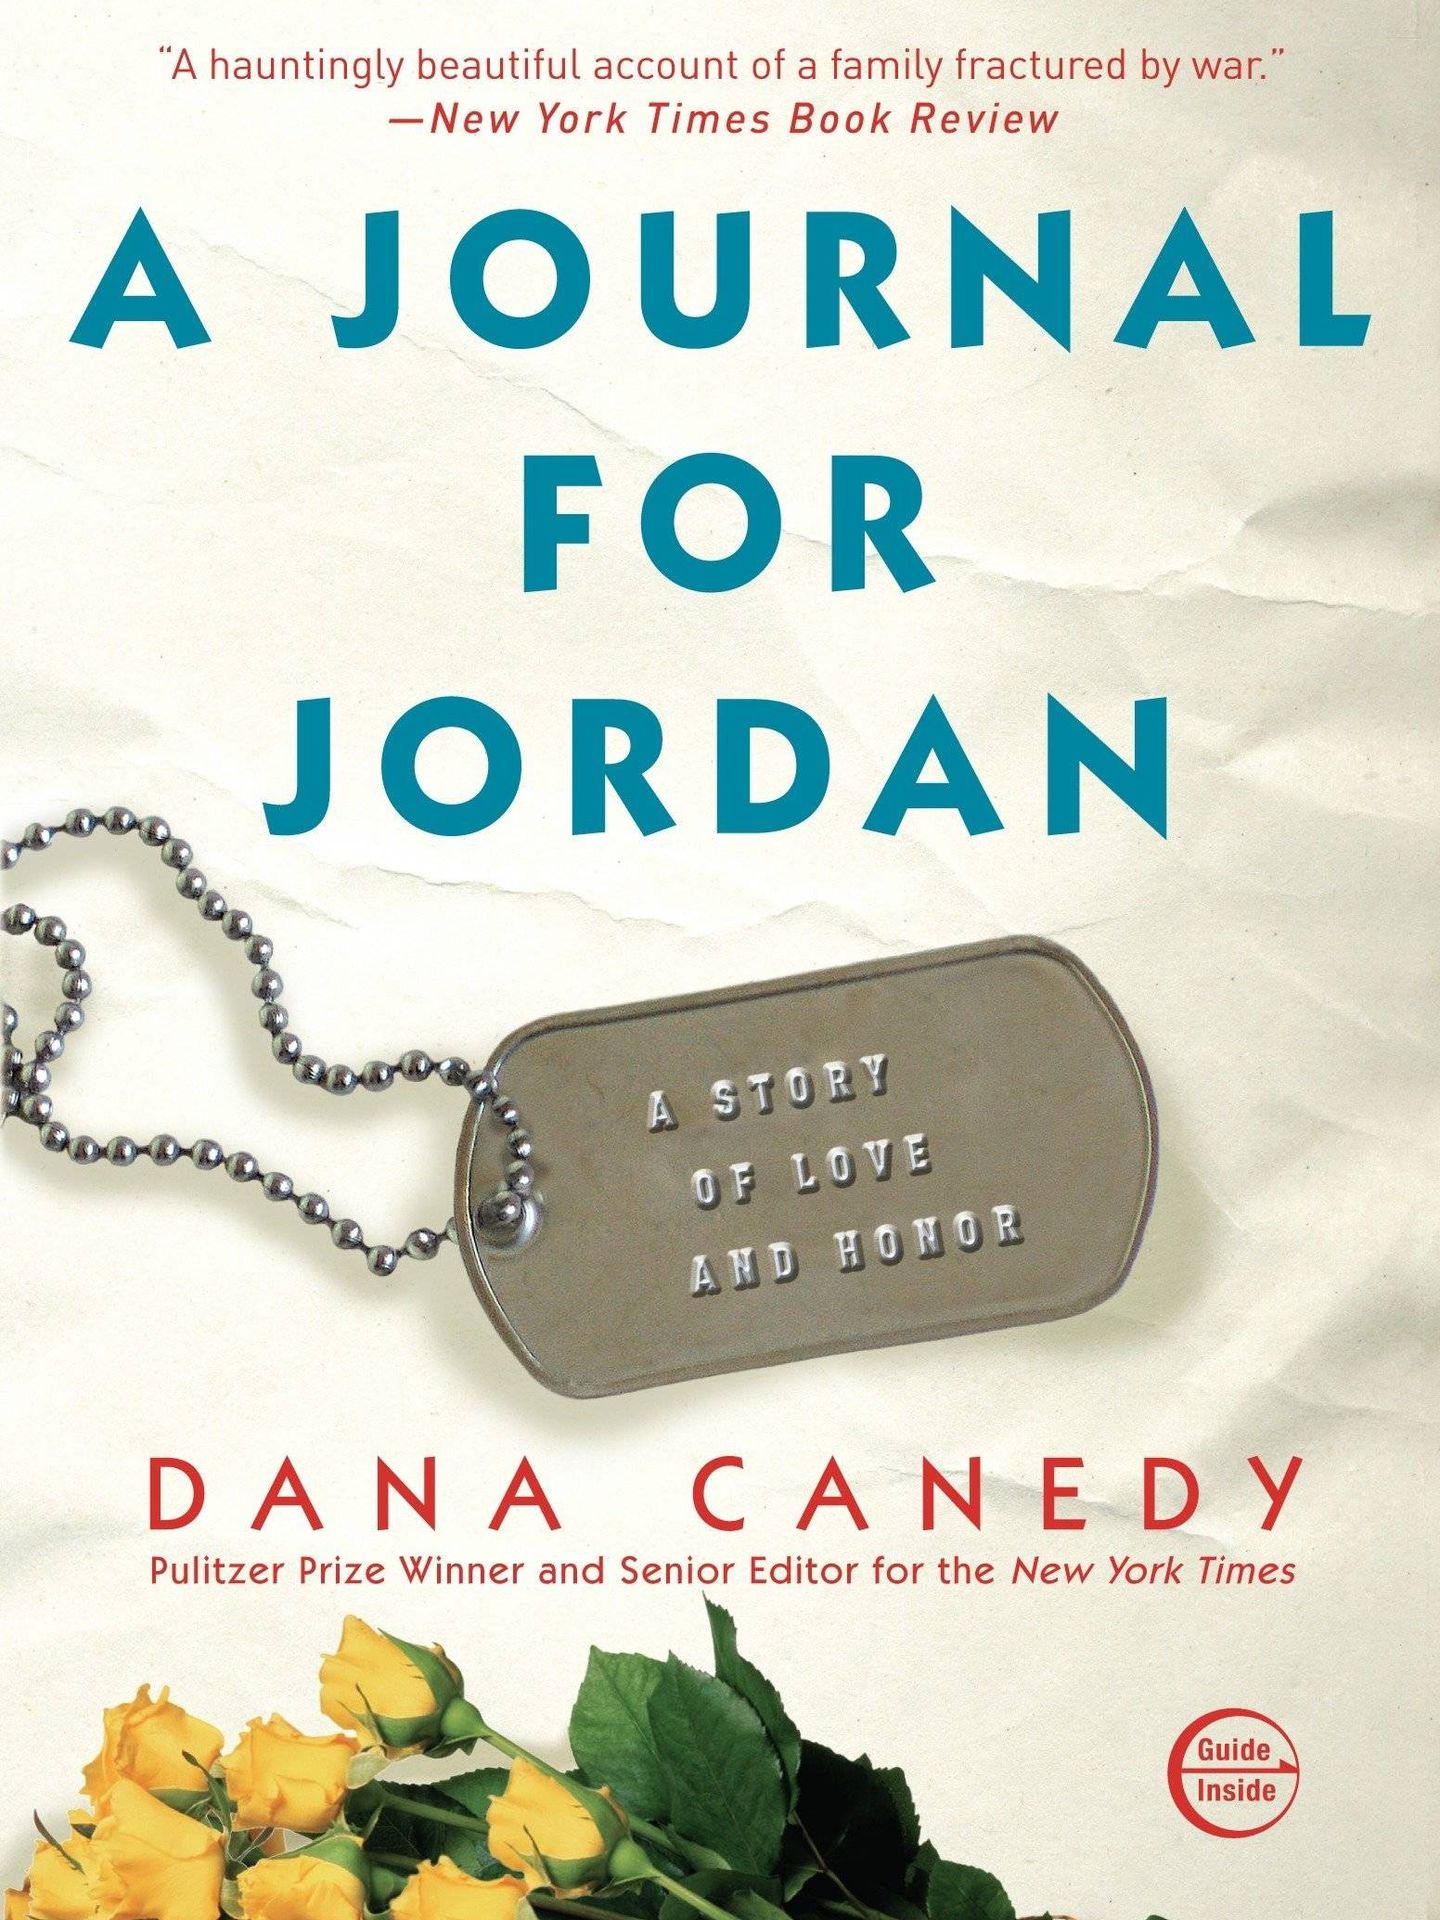 Portada de 'A Journal for Jordan'.